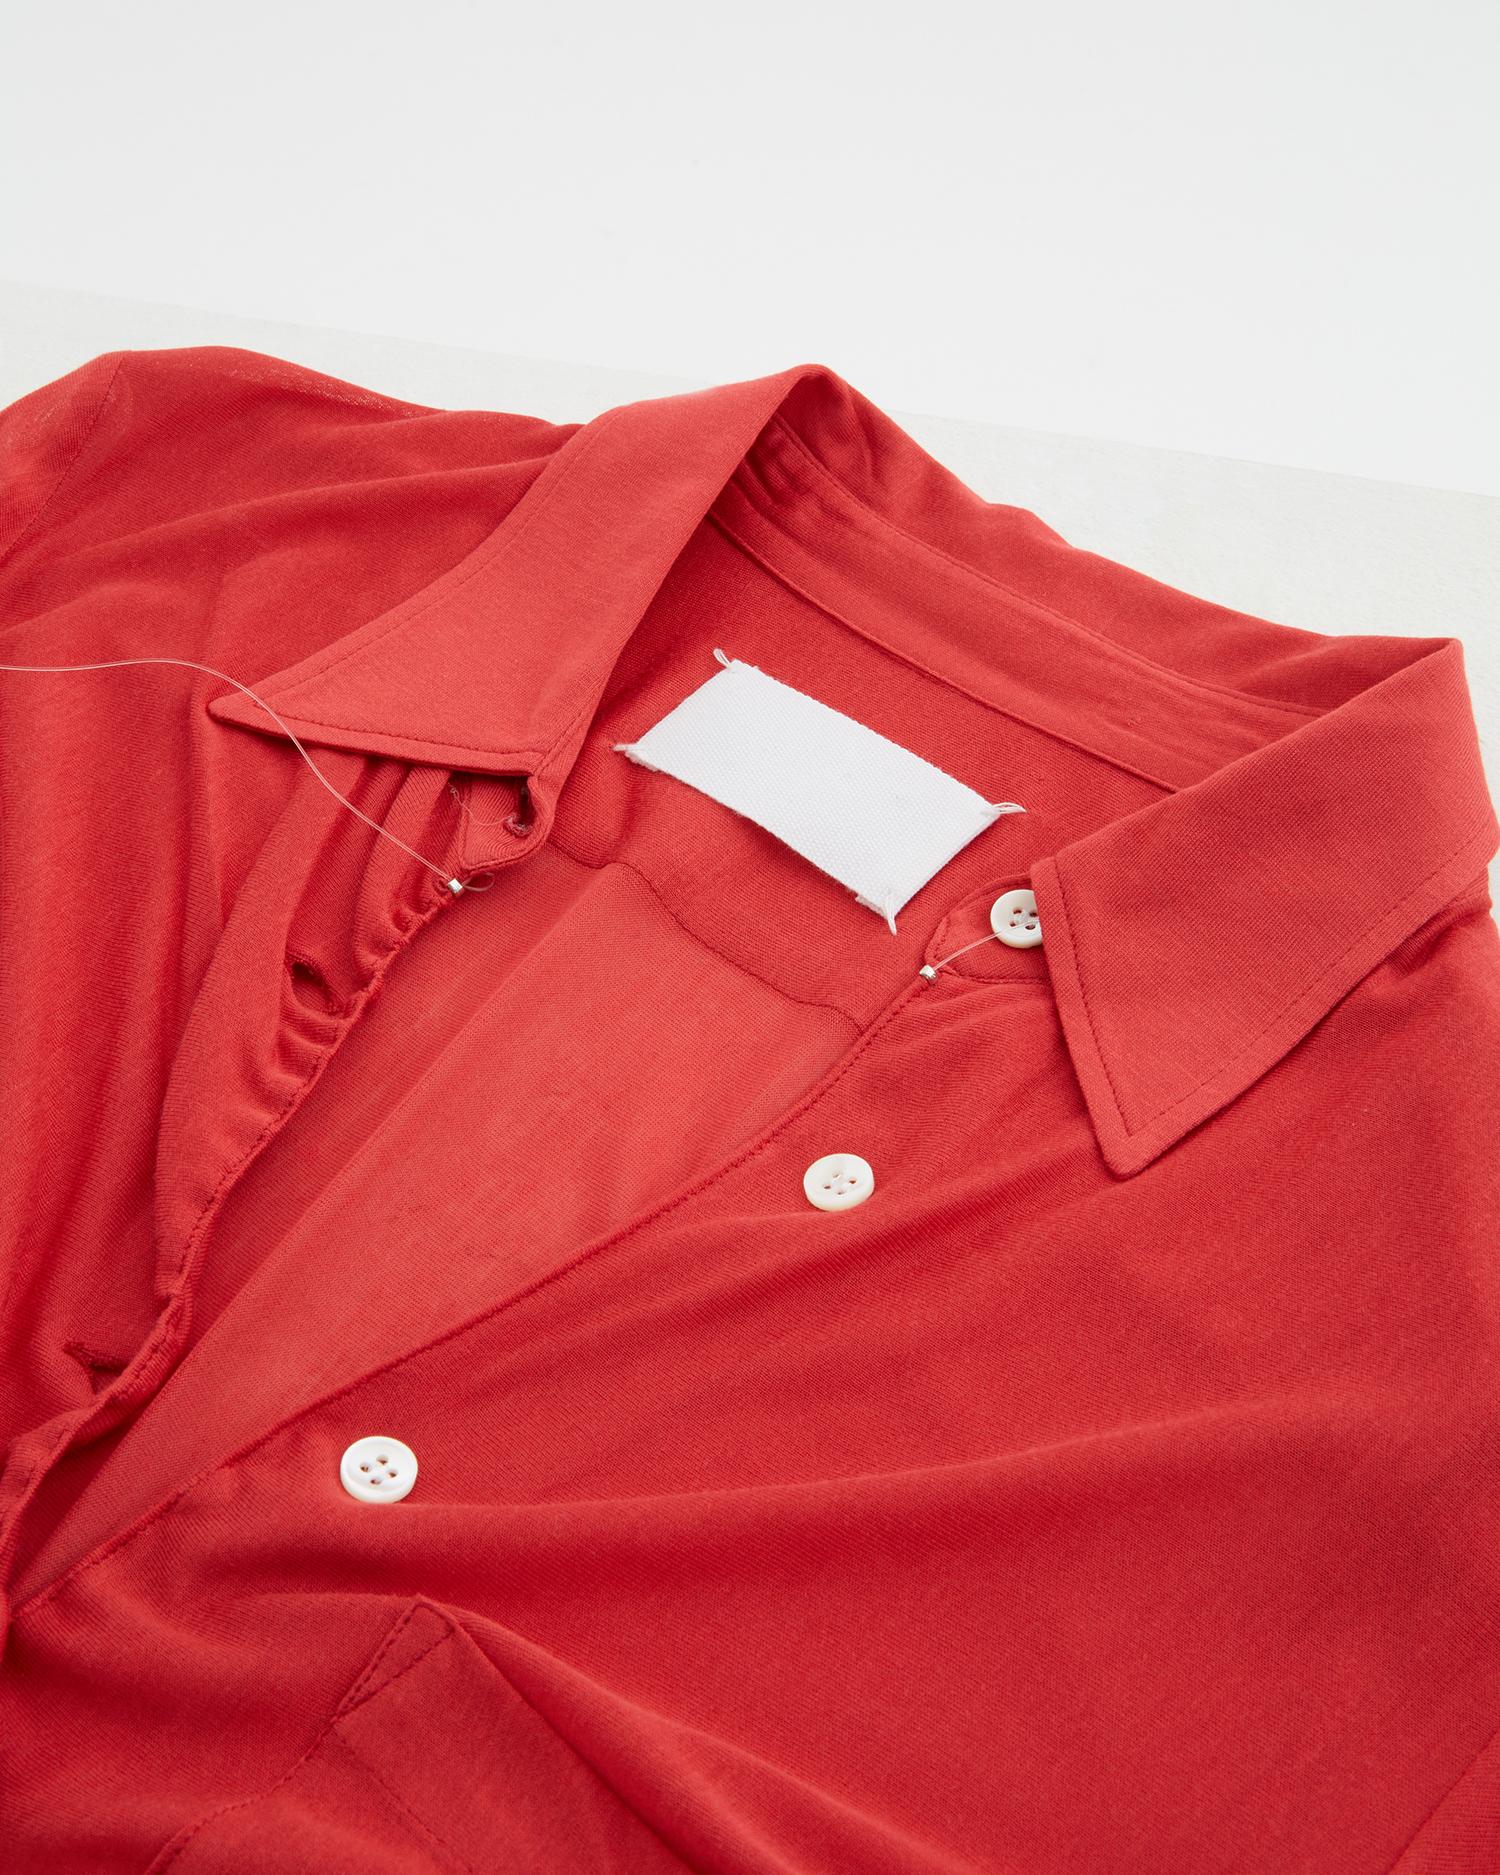 Women's Maison Martin Margiela red viscosa shirt, ss 2001 For Sale